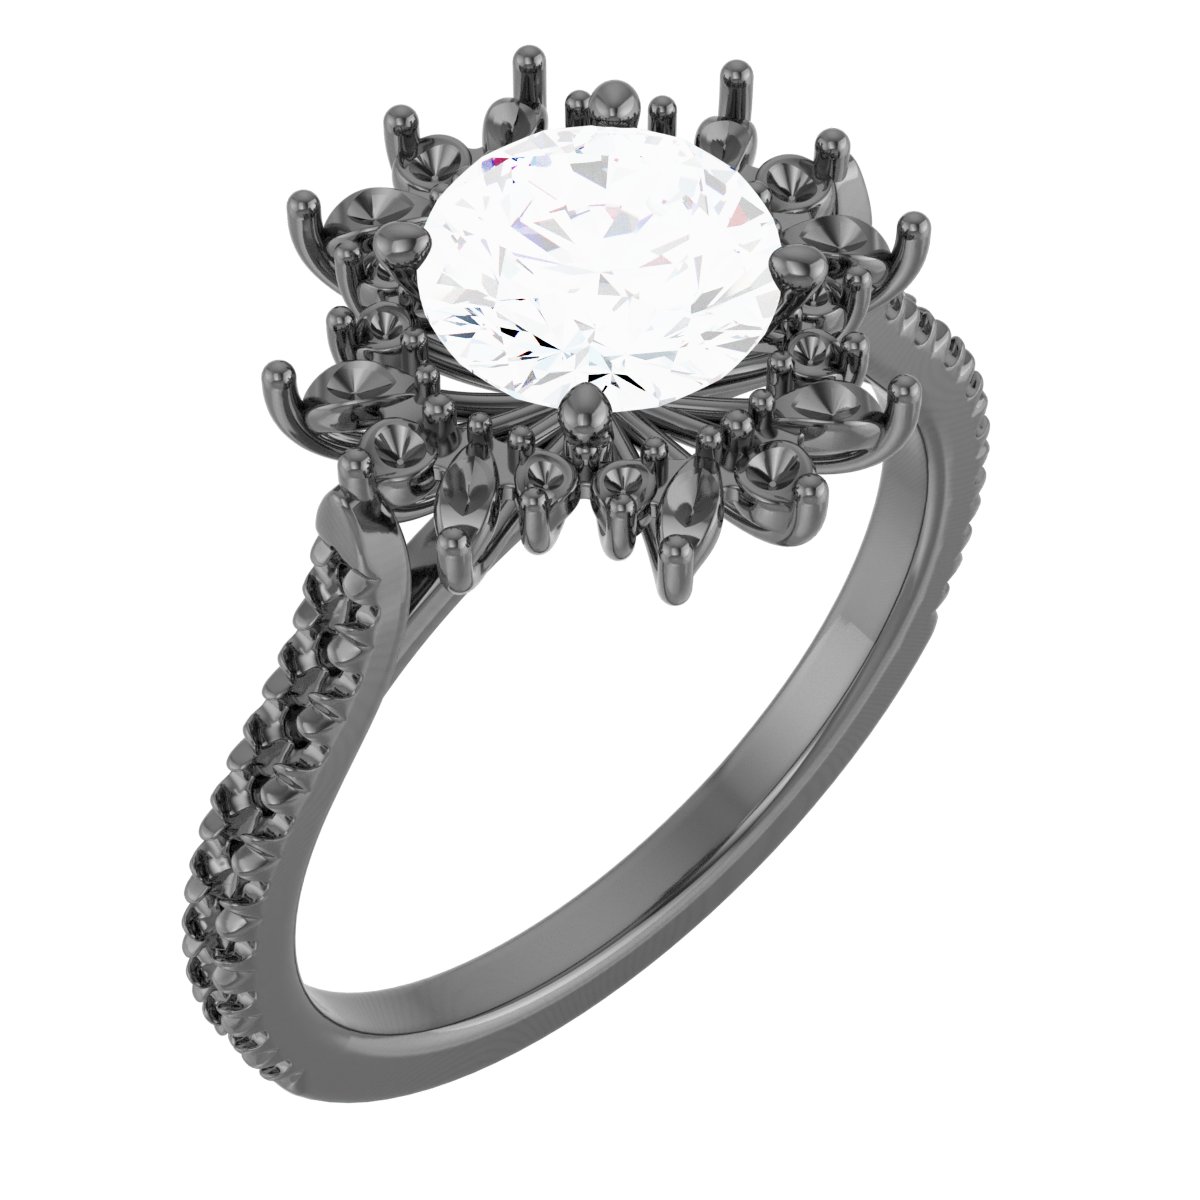 French-set Halo-Style Engagement Ring or Band